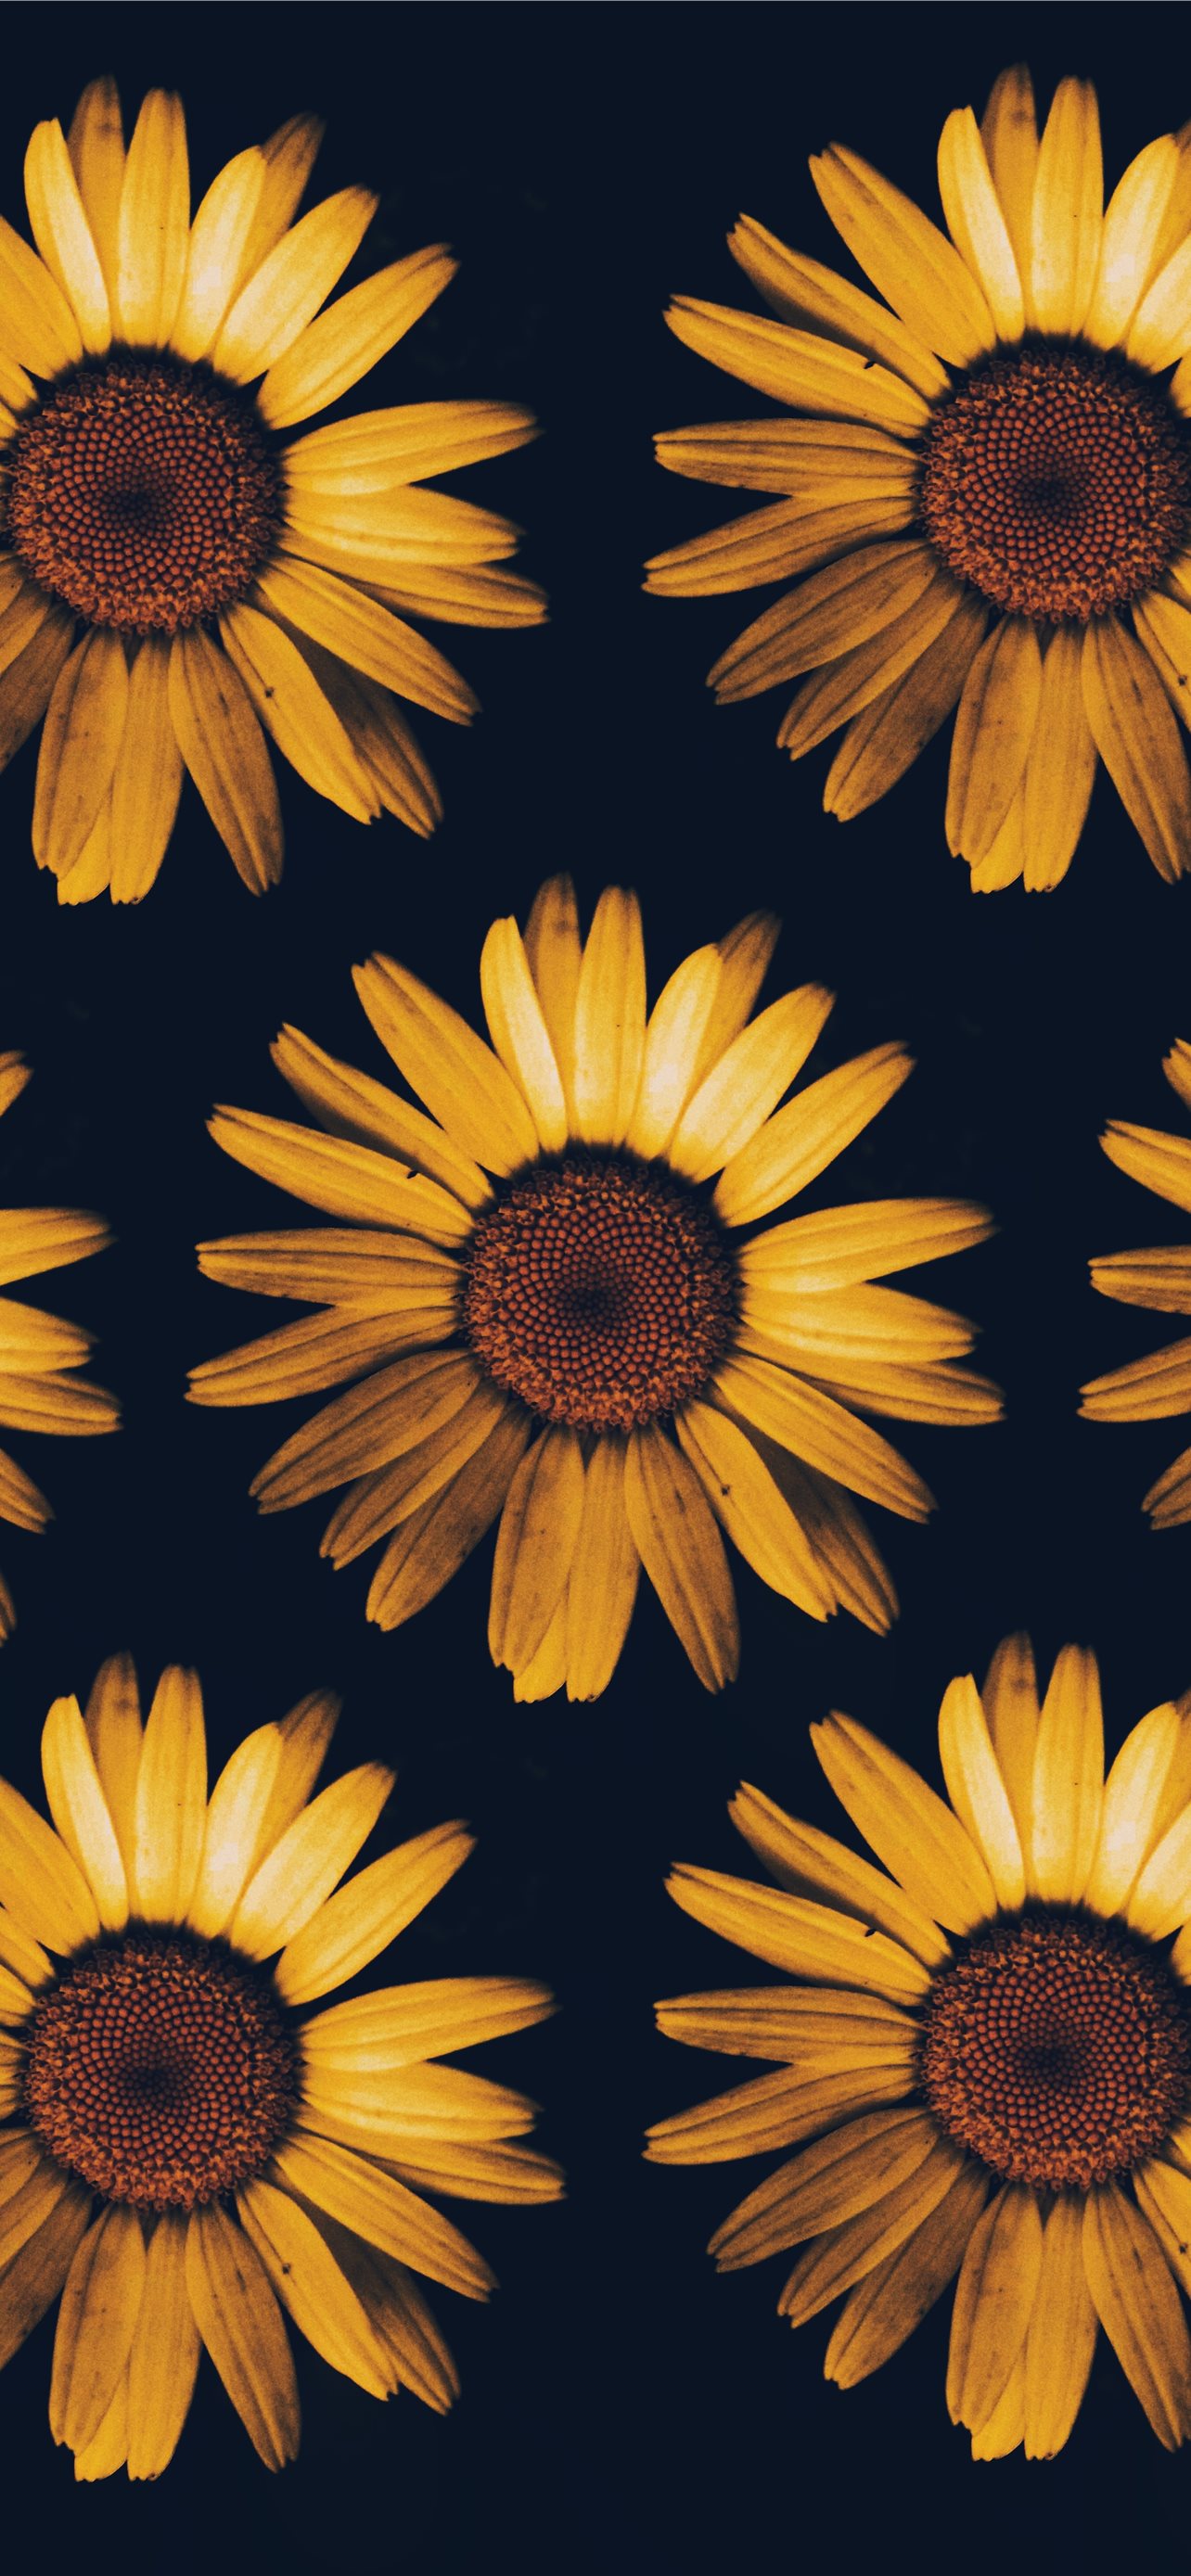 Best Sunflower iPhone HD Wallpapers - iLikeWallpaper